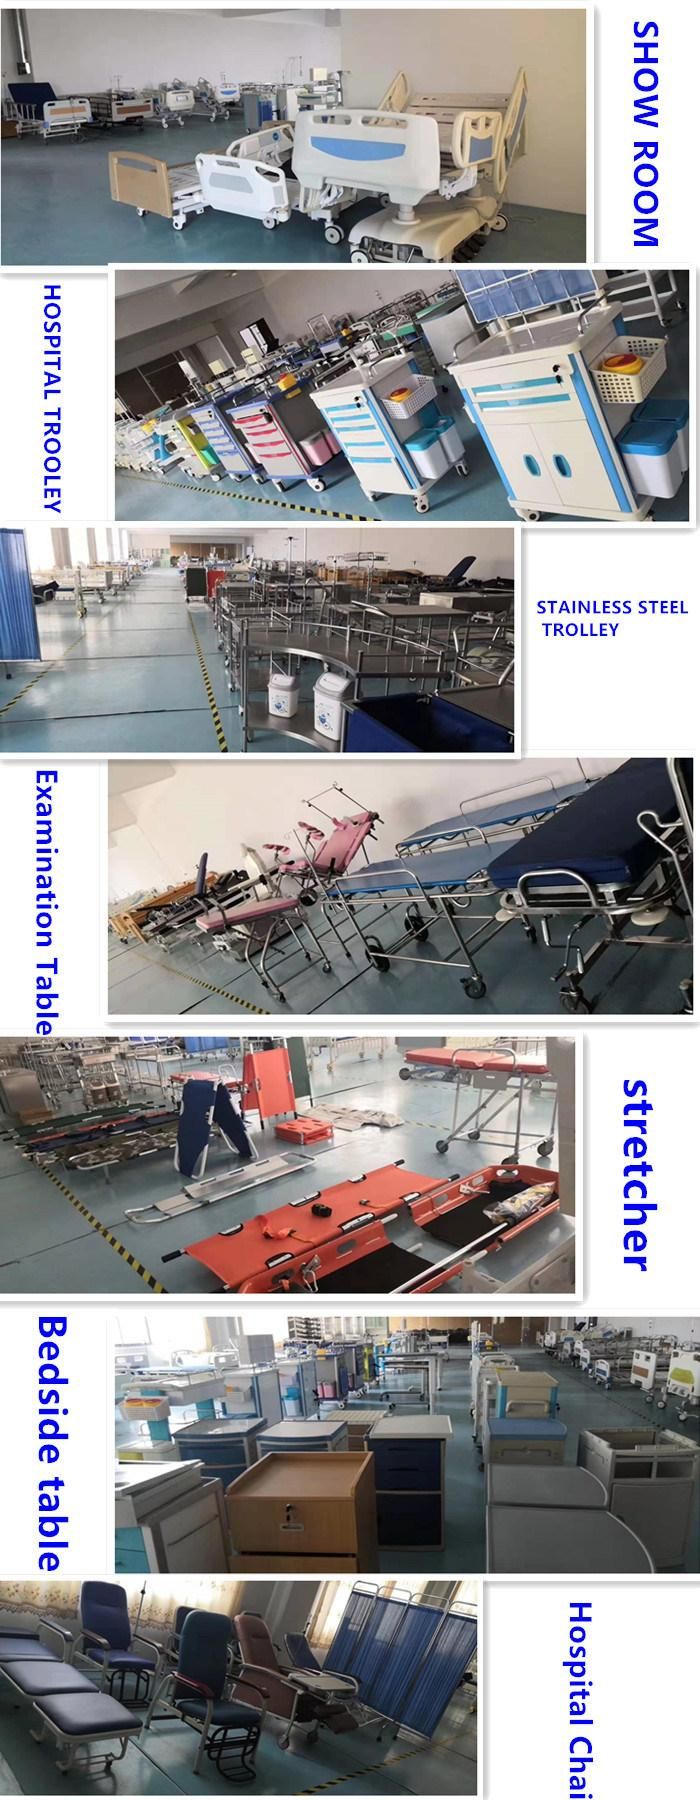 Medical Use Hospital Hydraulic Patient Emergency Transport Stretcher Trolley